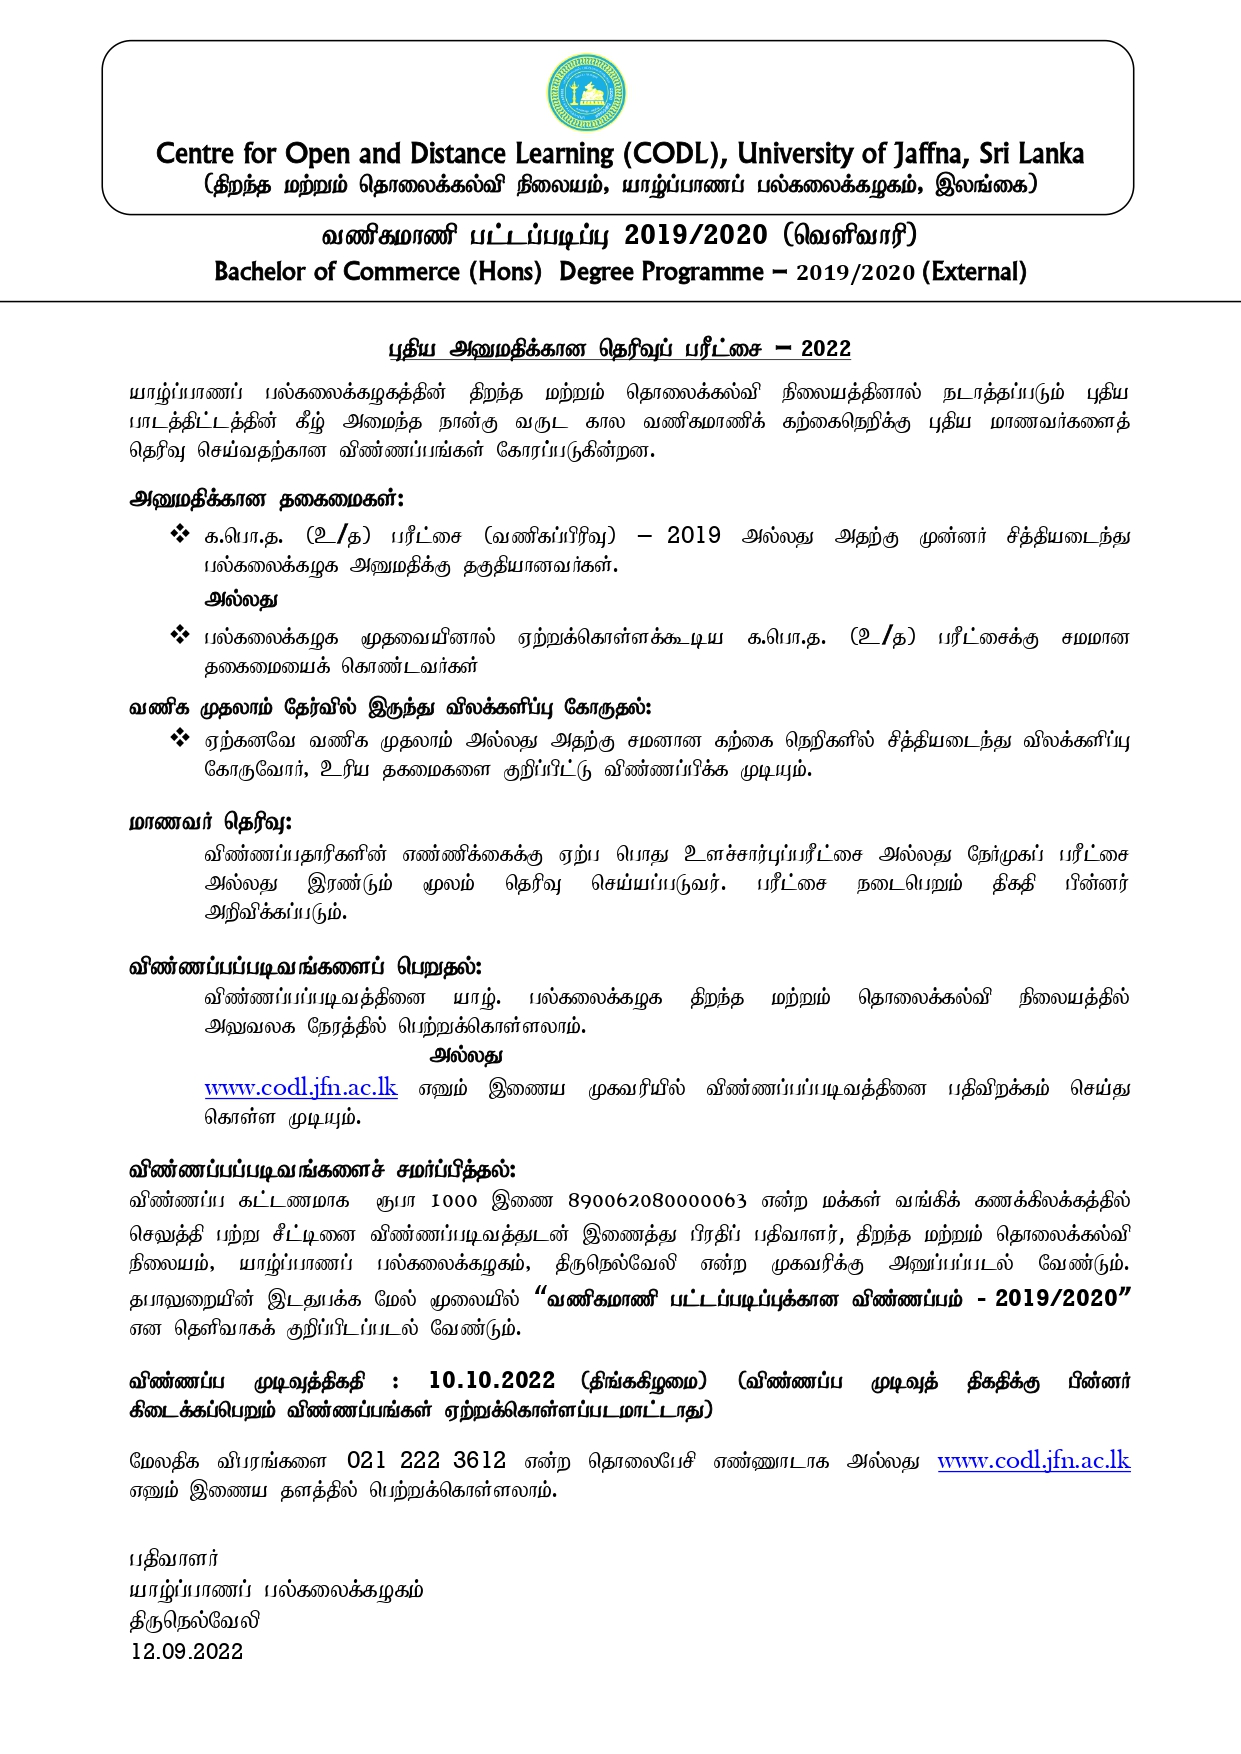 Bachelor of Commerce (B.Com) External Degree Programme (2022) - University of Jaffna